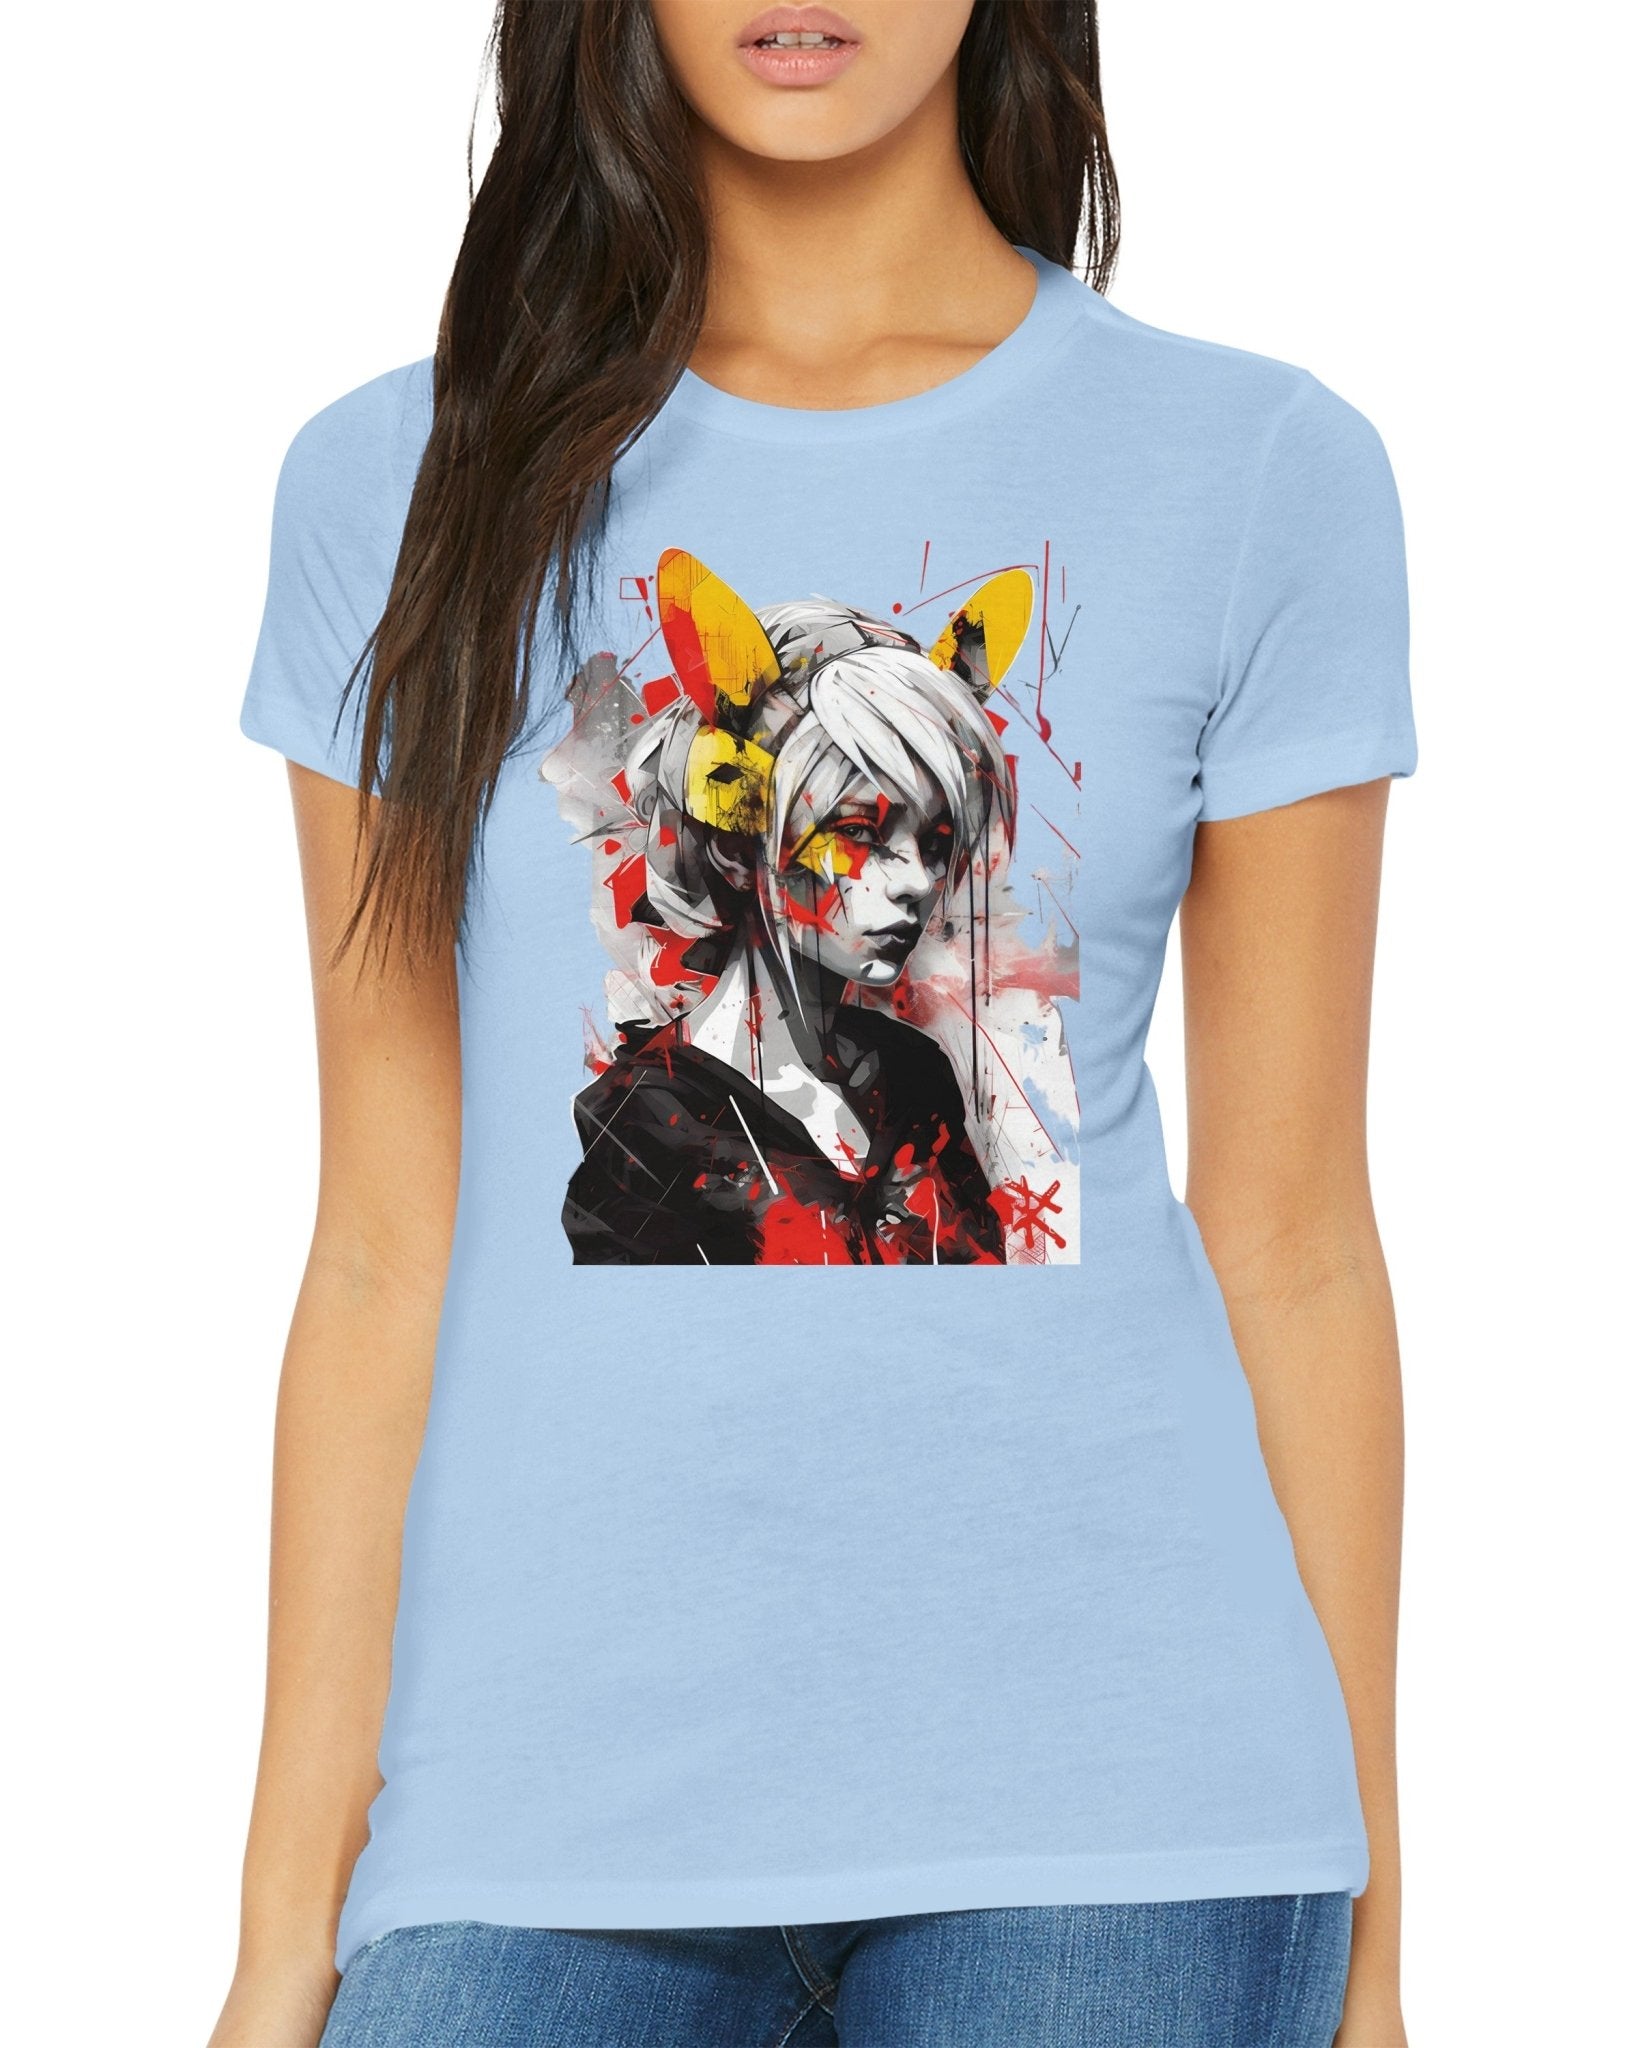 GIRL WITH CAT EARS Premium Tee - Rarileto t shirts